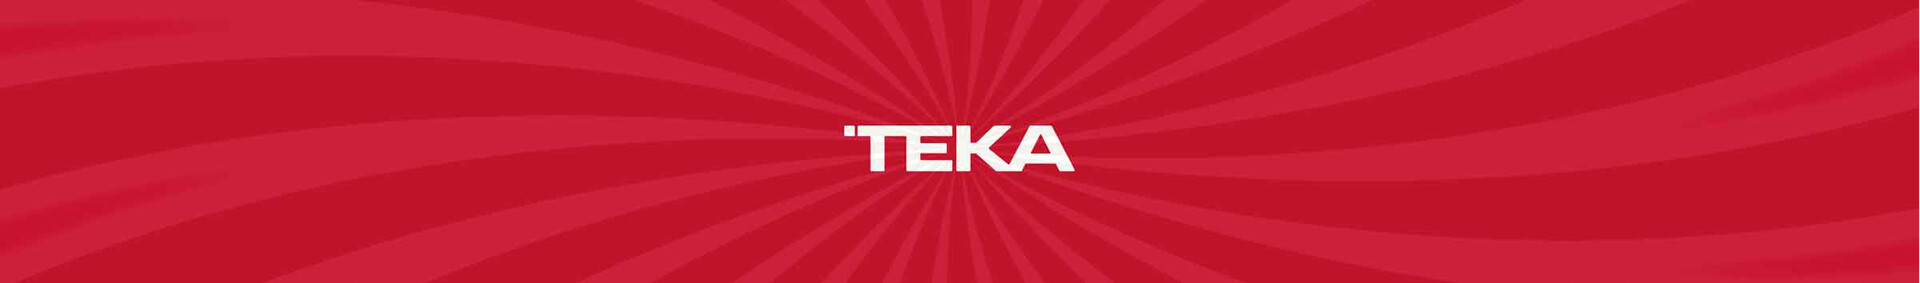 Teka Maroc Store logo